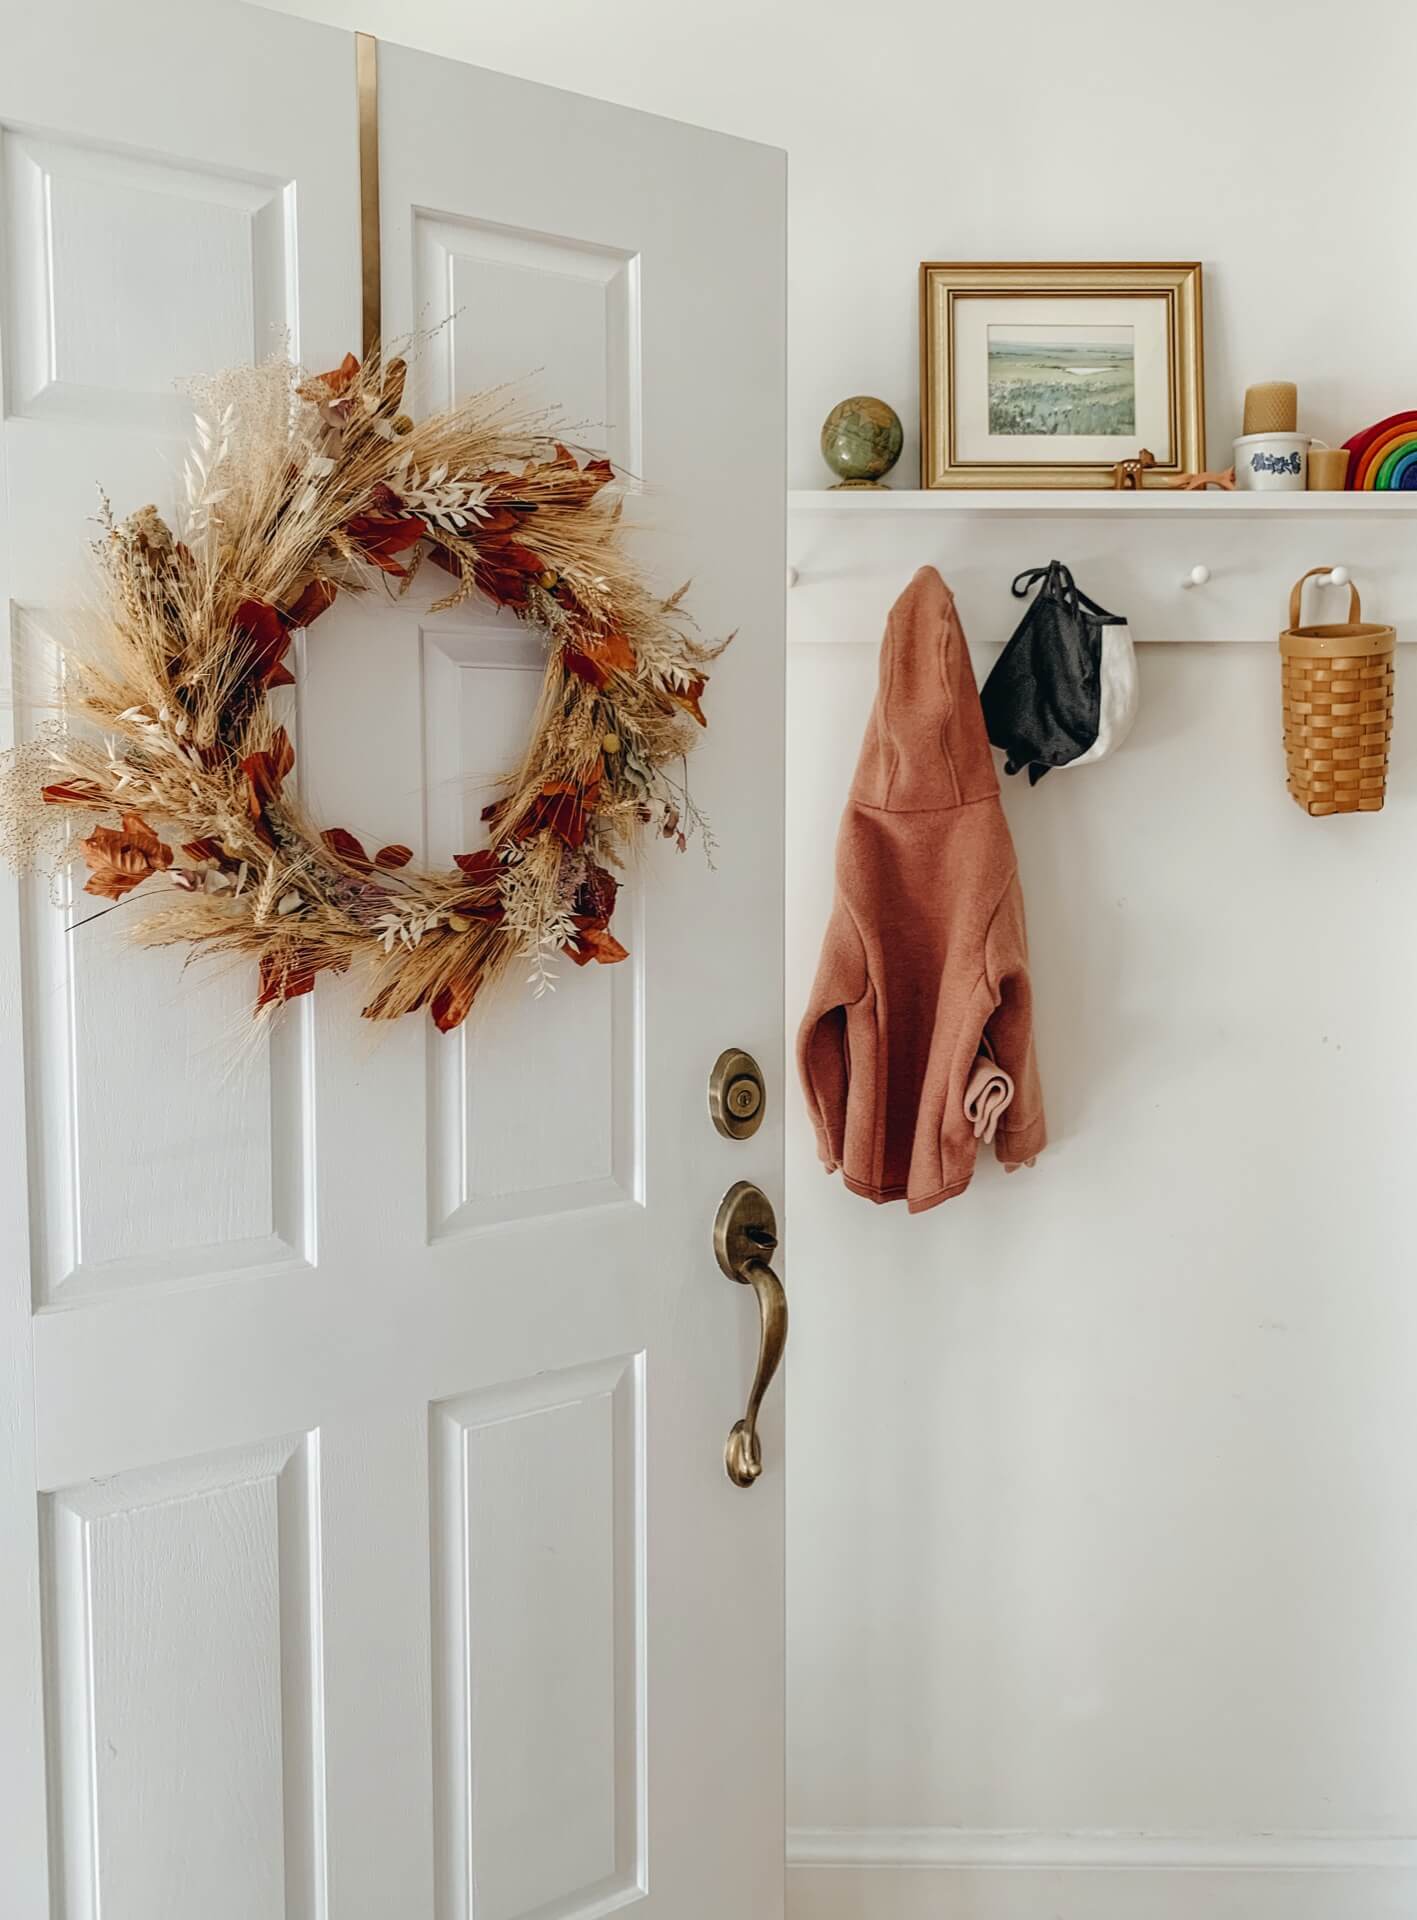 Home tour with Leah Gaeddert - a dried flower wreath hangs on a door